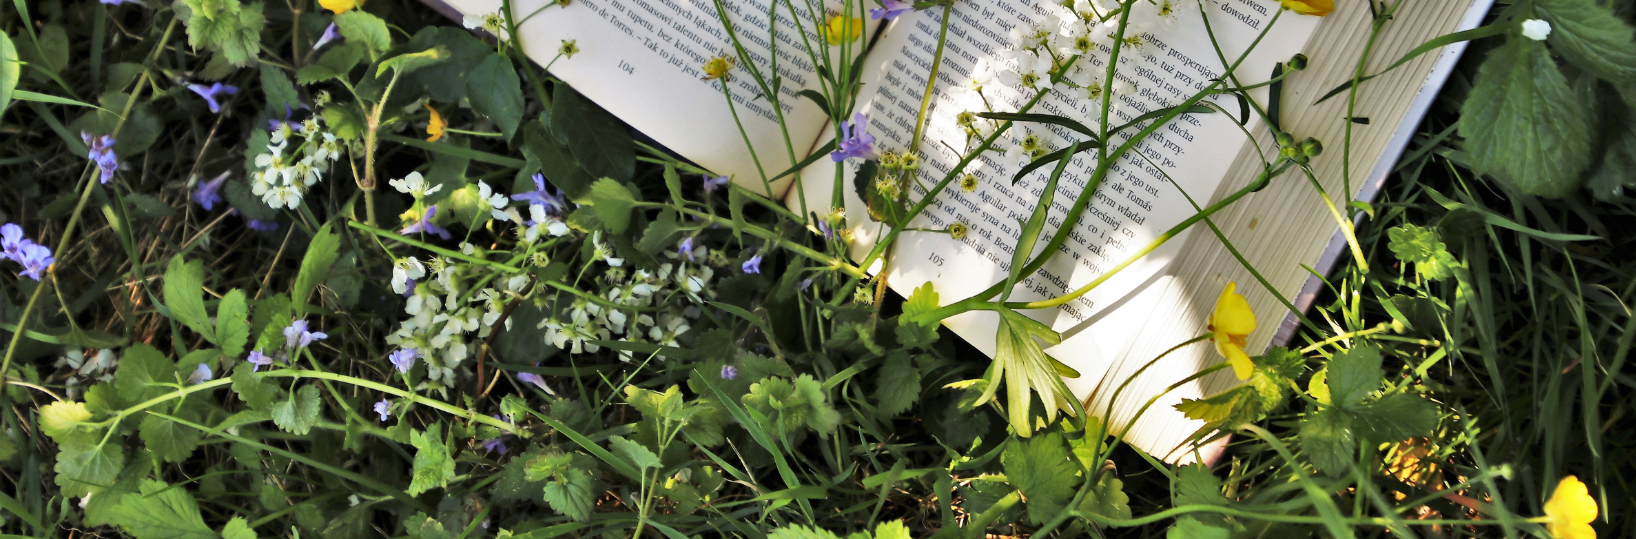 book in field of wildflowers